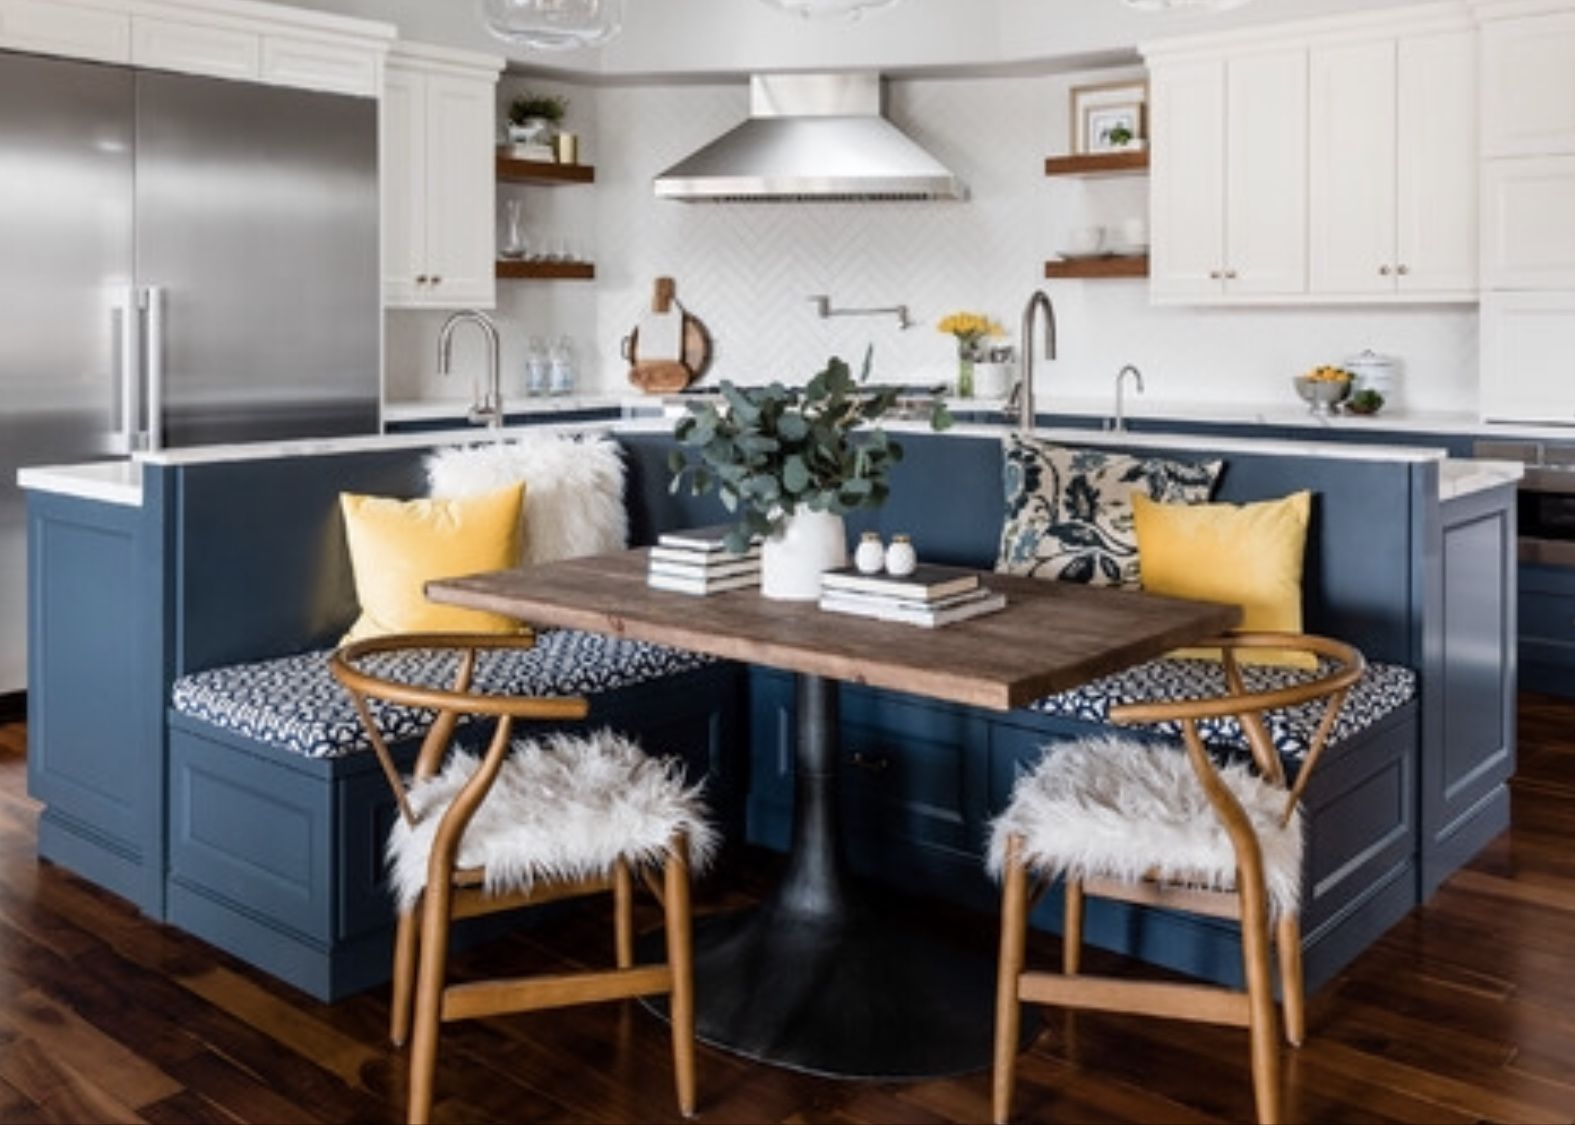 Dreifuss Fireplaces Luxury island Booth Dream Home Ideas In 2019